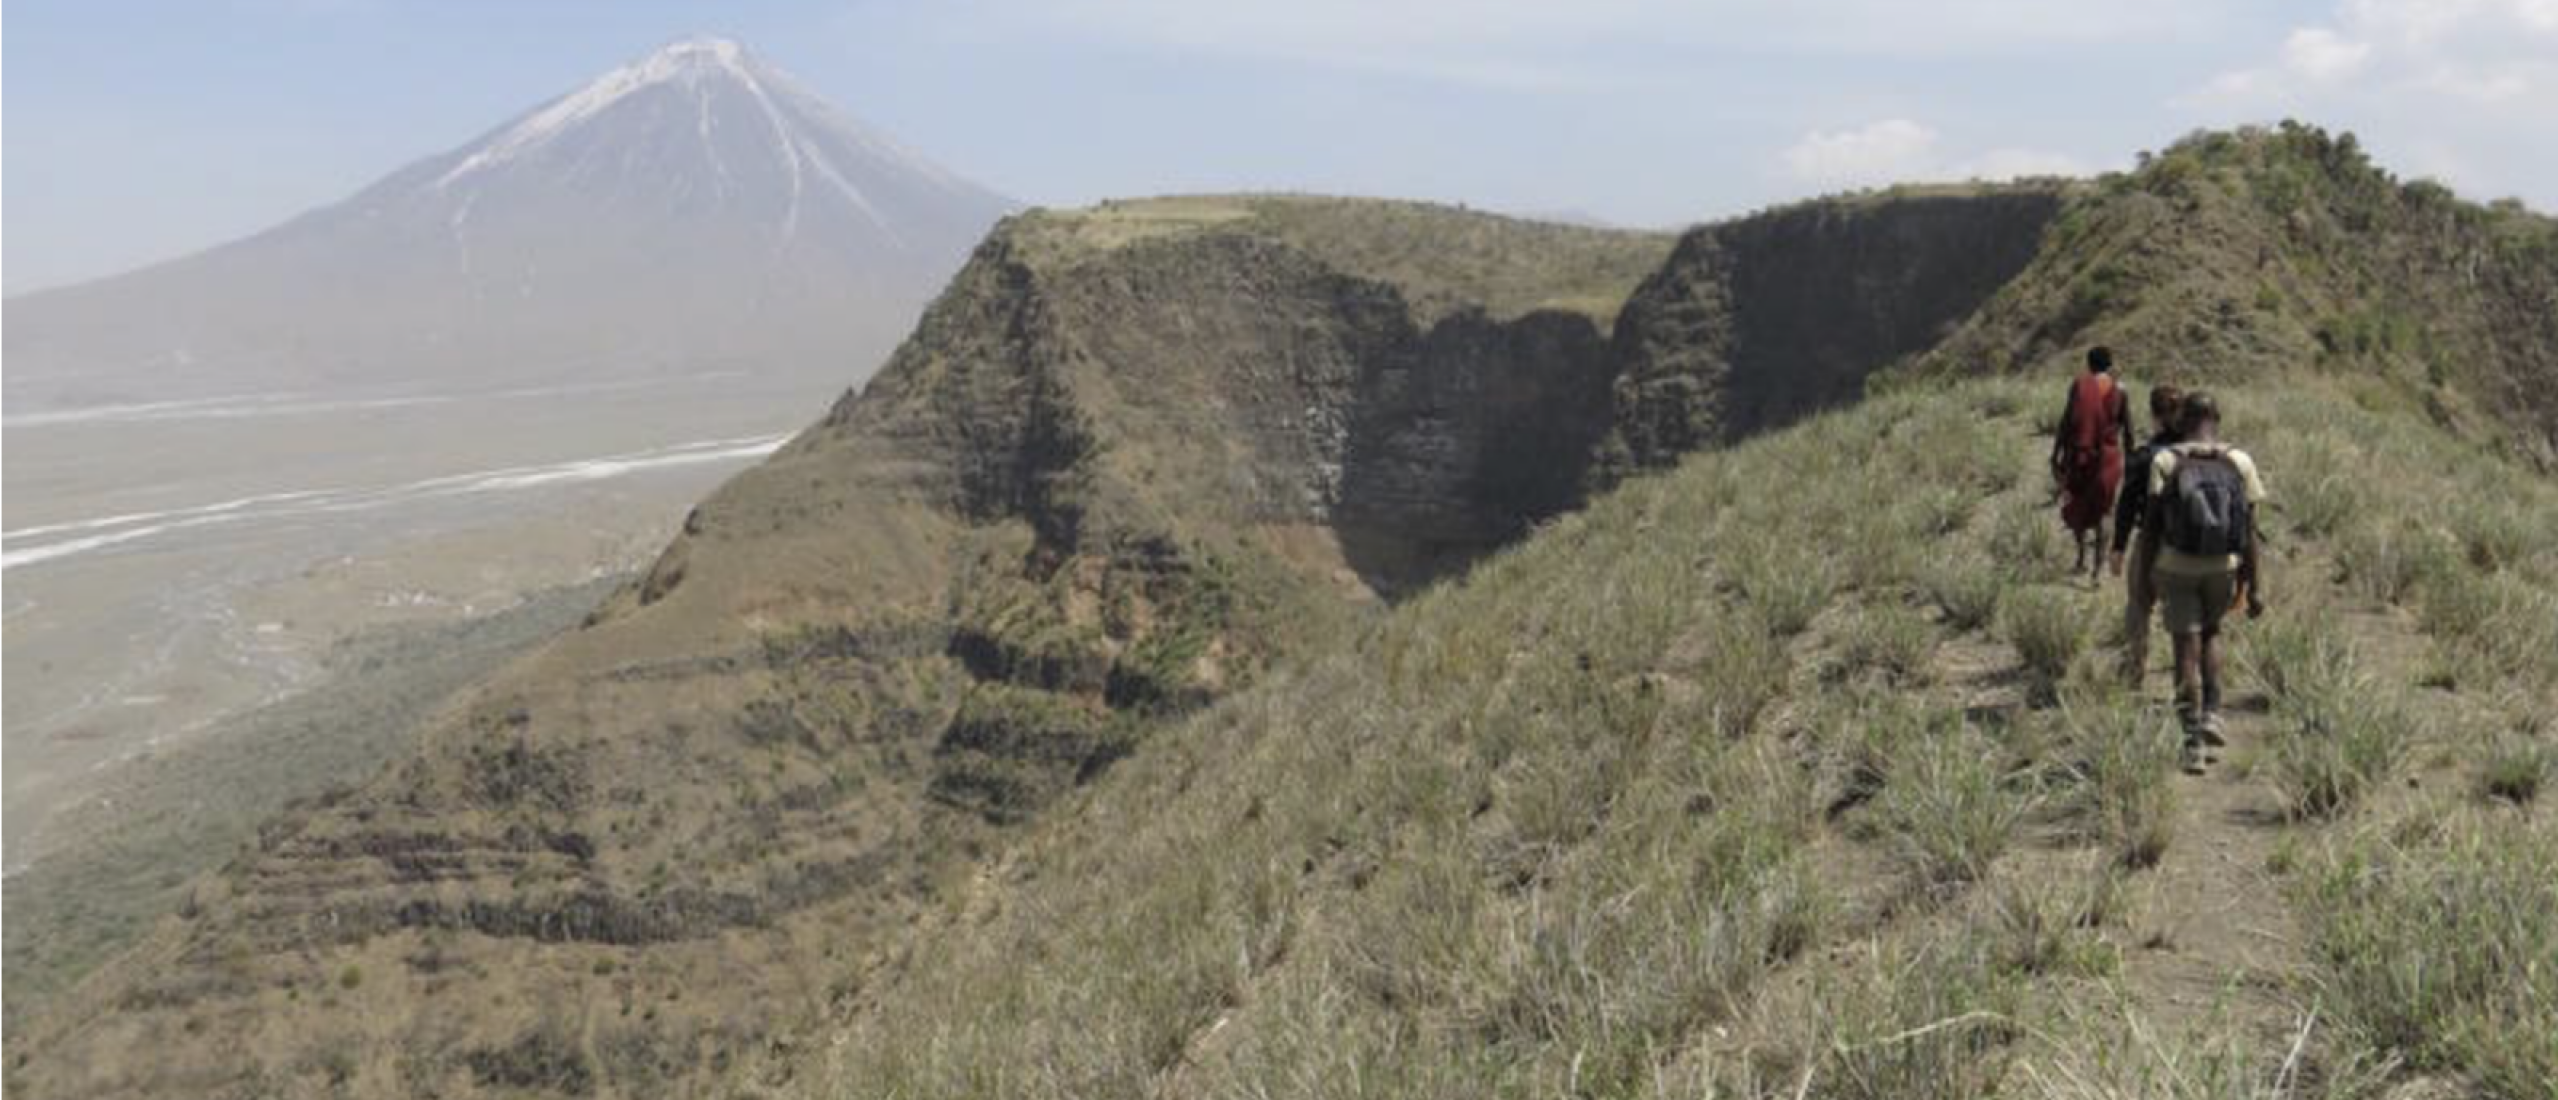 The Great Rift Valley Trek and Tanzania's Ngorongoro highlands